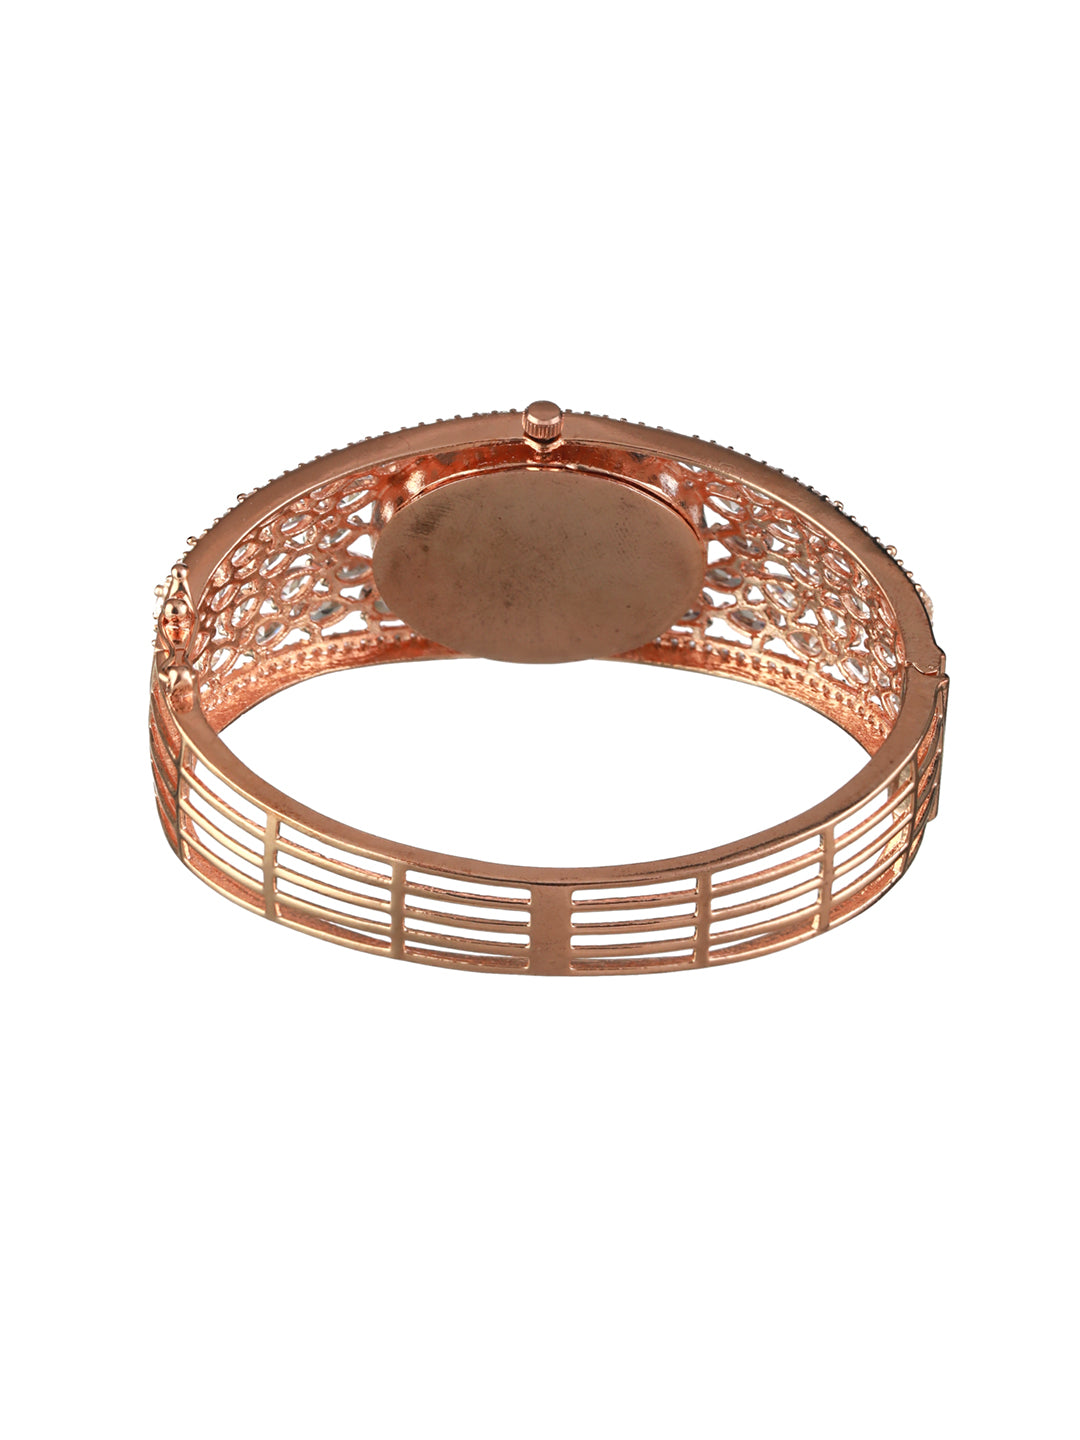 Crestello Rose Gold Plated Bracelet Analog Wrist Watch for Women JWL117RG   JioMart